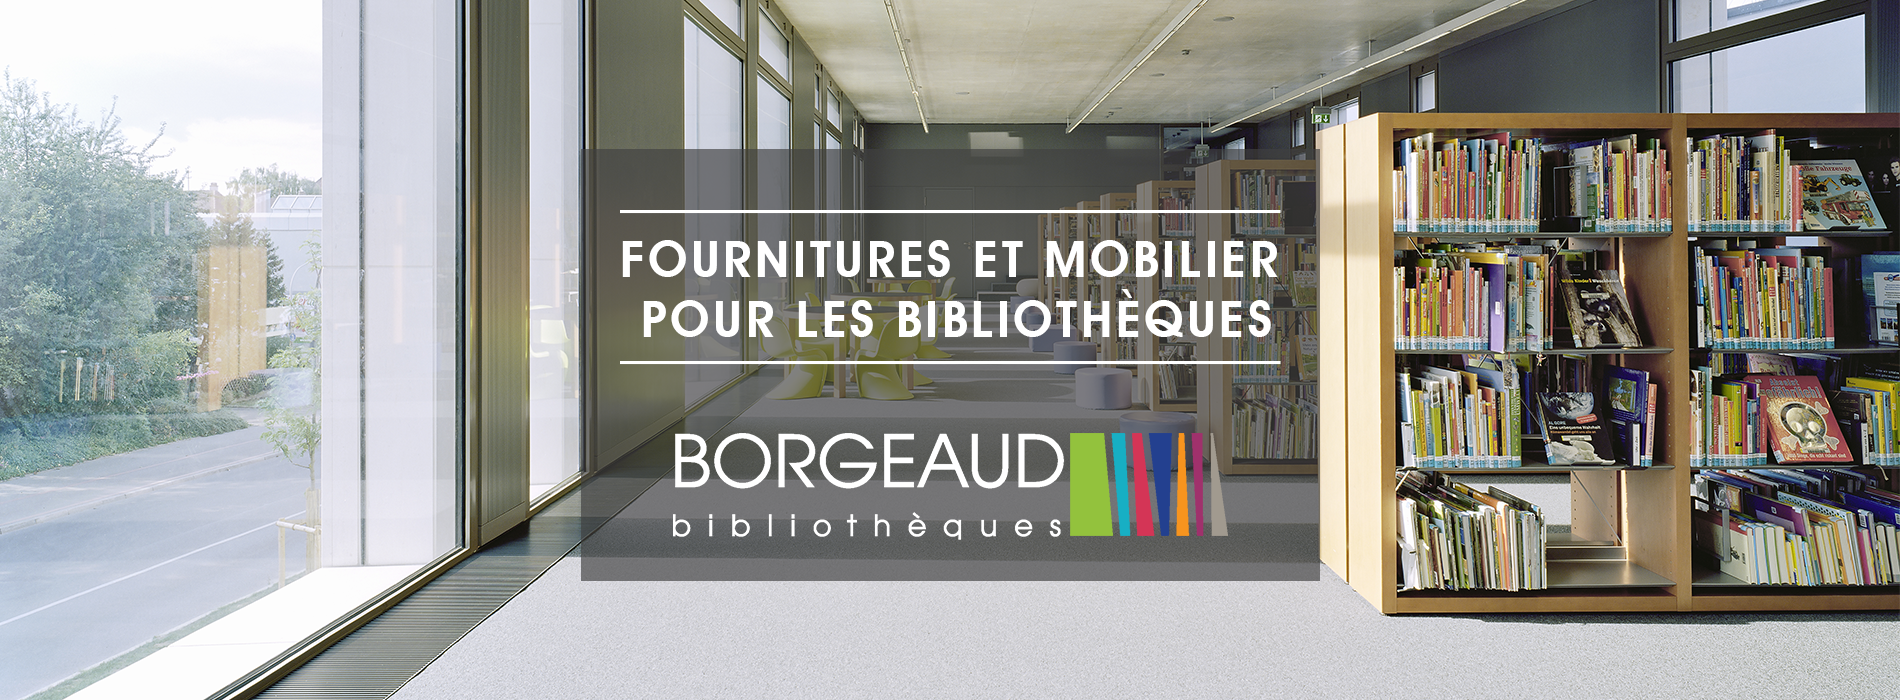 Borgeaud Bibliothèques